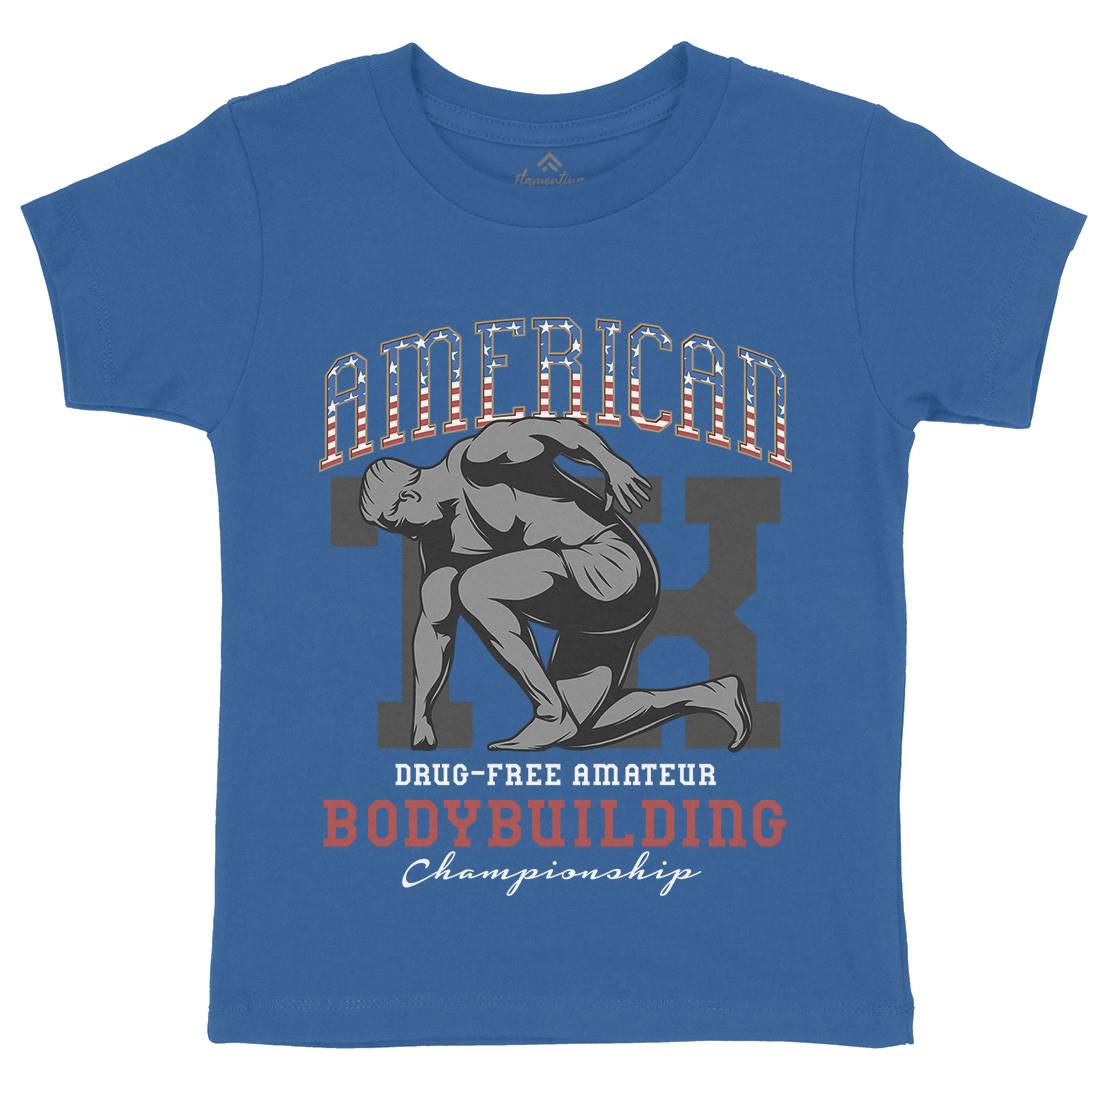 American Bodybuilding Kids Organic Crew Neck T-Shirt Gym D901